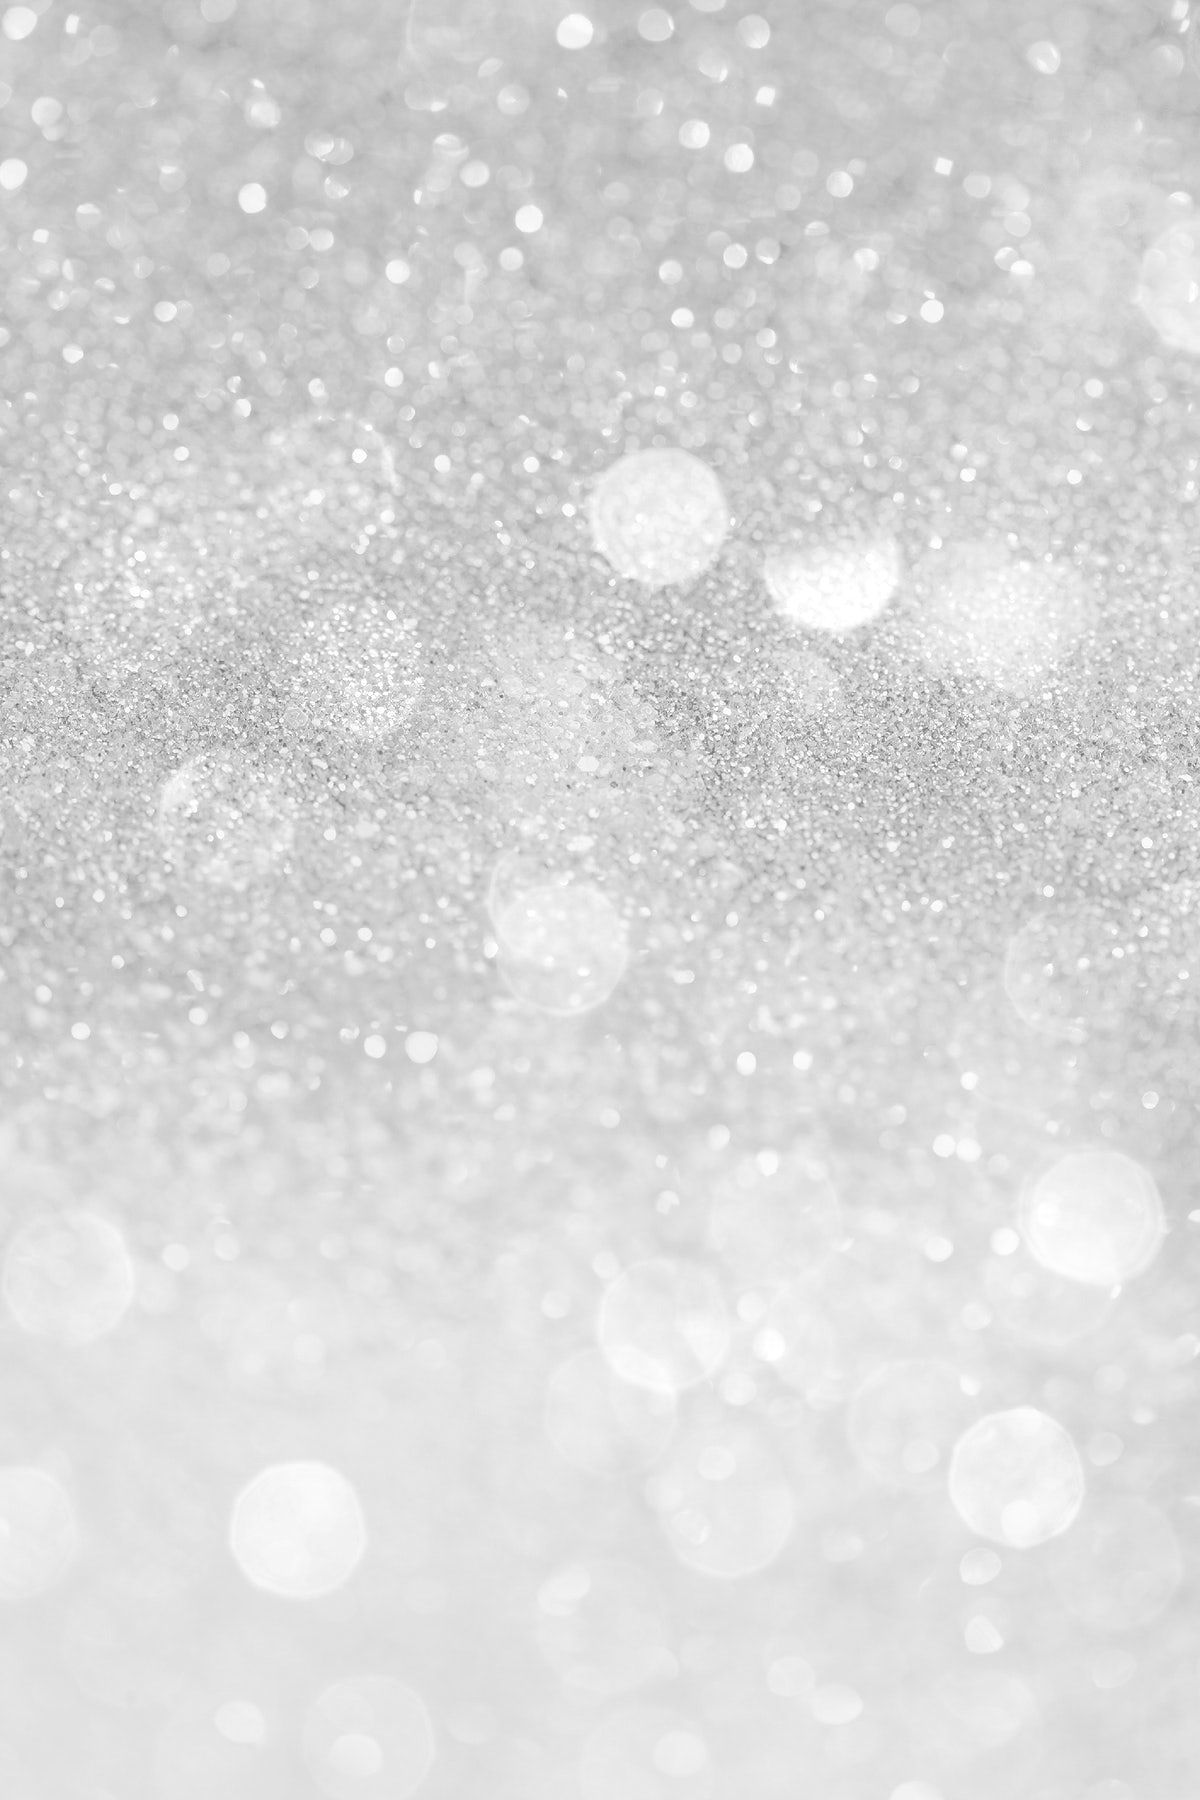 White glitter pattern on a gray background. free image / katie. White glitter wallpaper, Silver glitter wallpaper, Glitter background